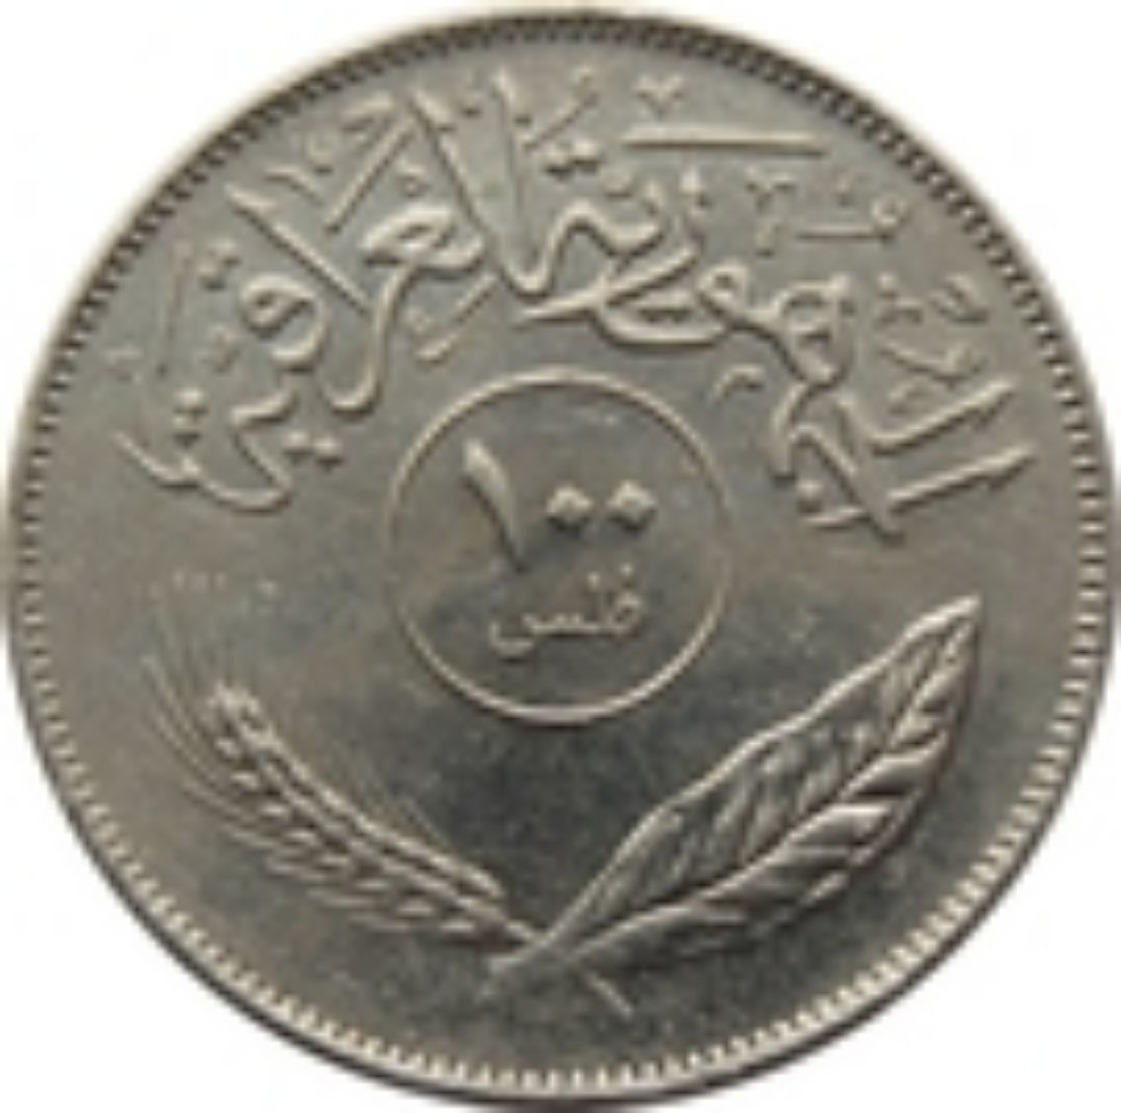 Iraq Coins 100 Fils 1975 Nice Coin - Iraq